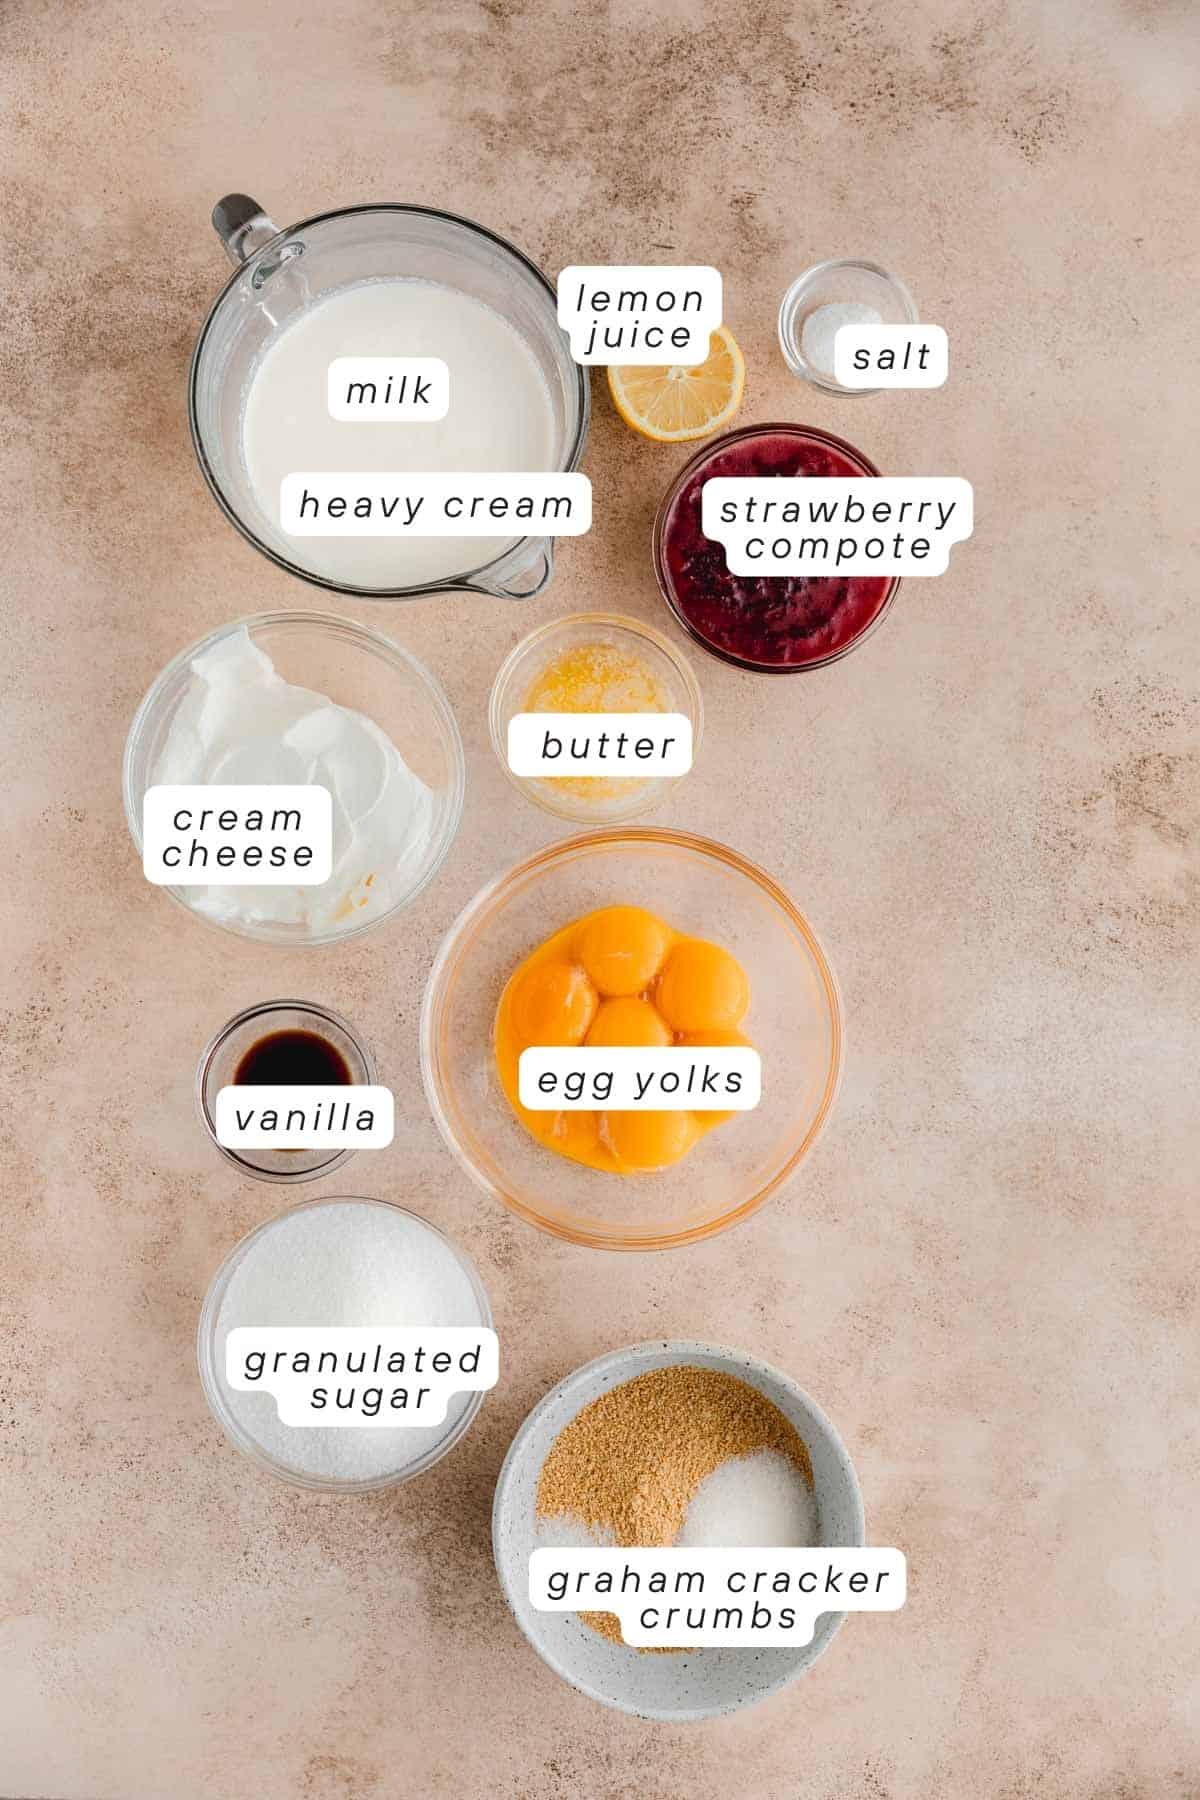 Milk, heavy cream, lemon juice, salt, egg yolks, butter, cream cheese, vanilla, sugar, graham cracker and strawberry compote. 